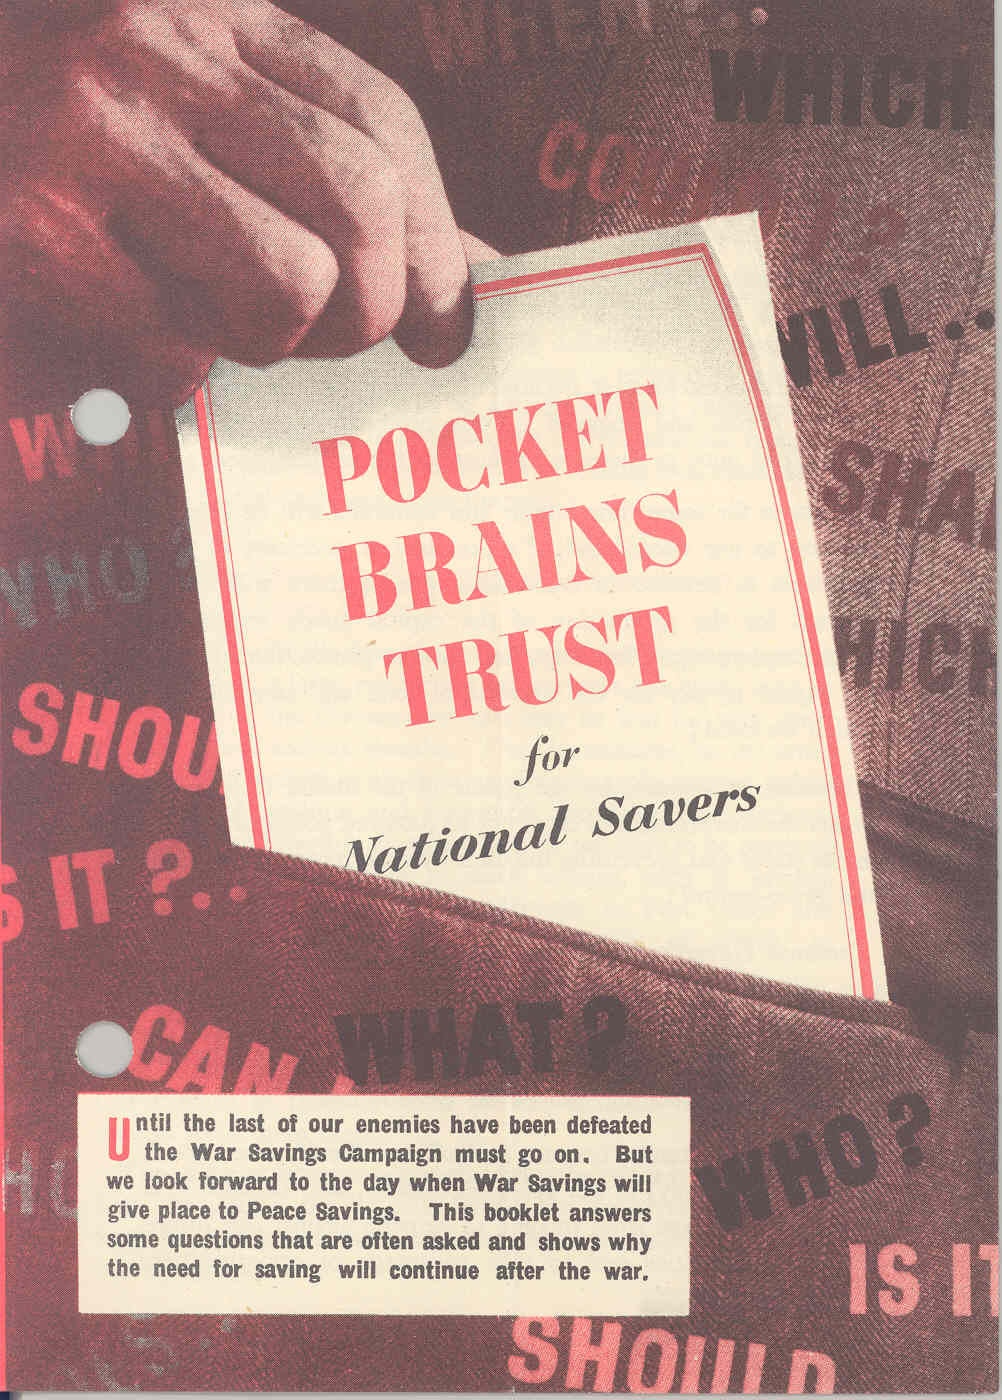 'Pocket Brains Trust for National Savers', 1945